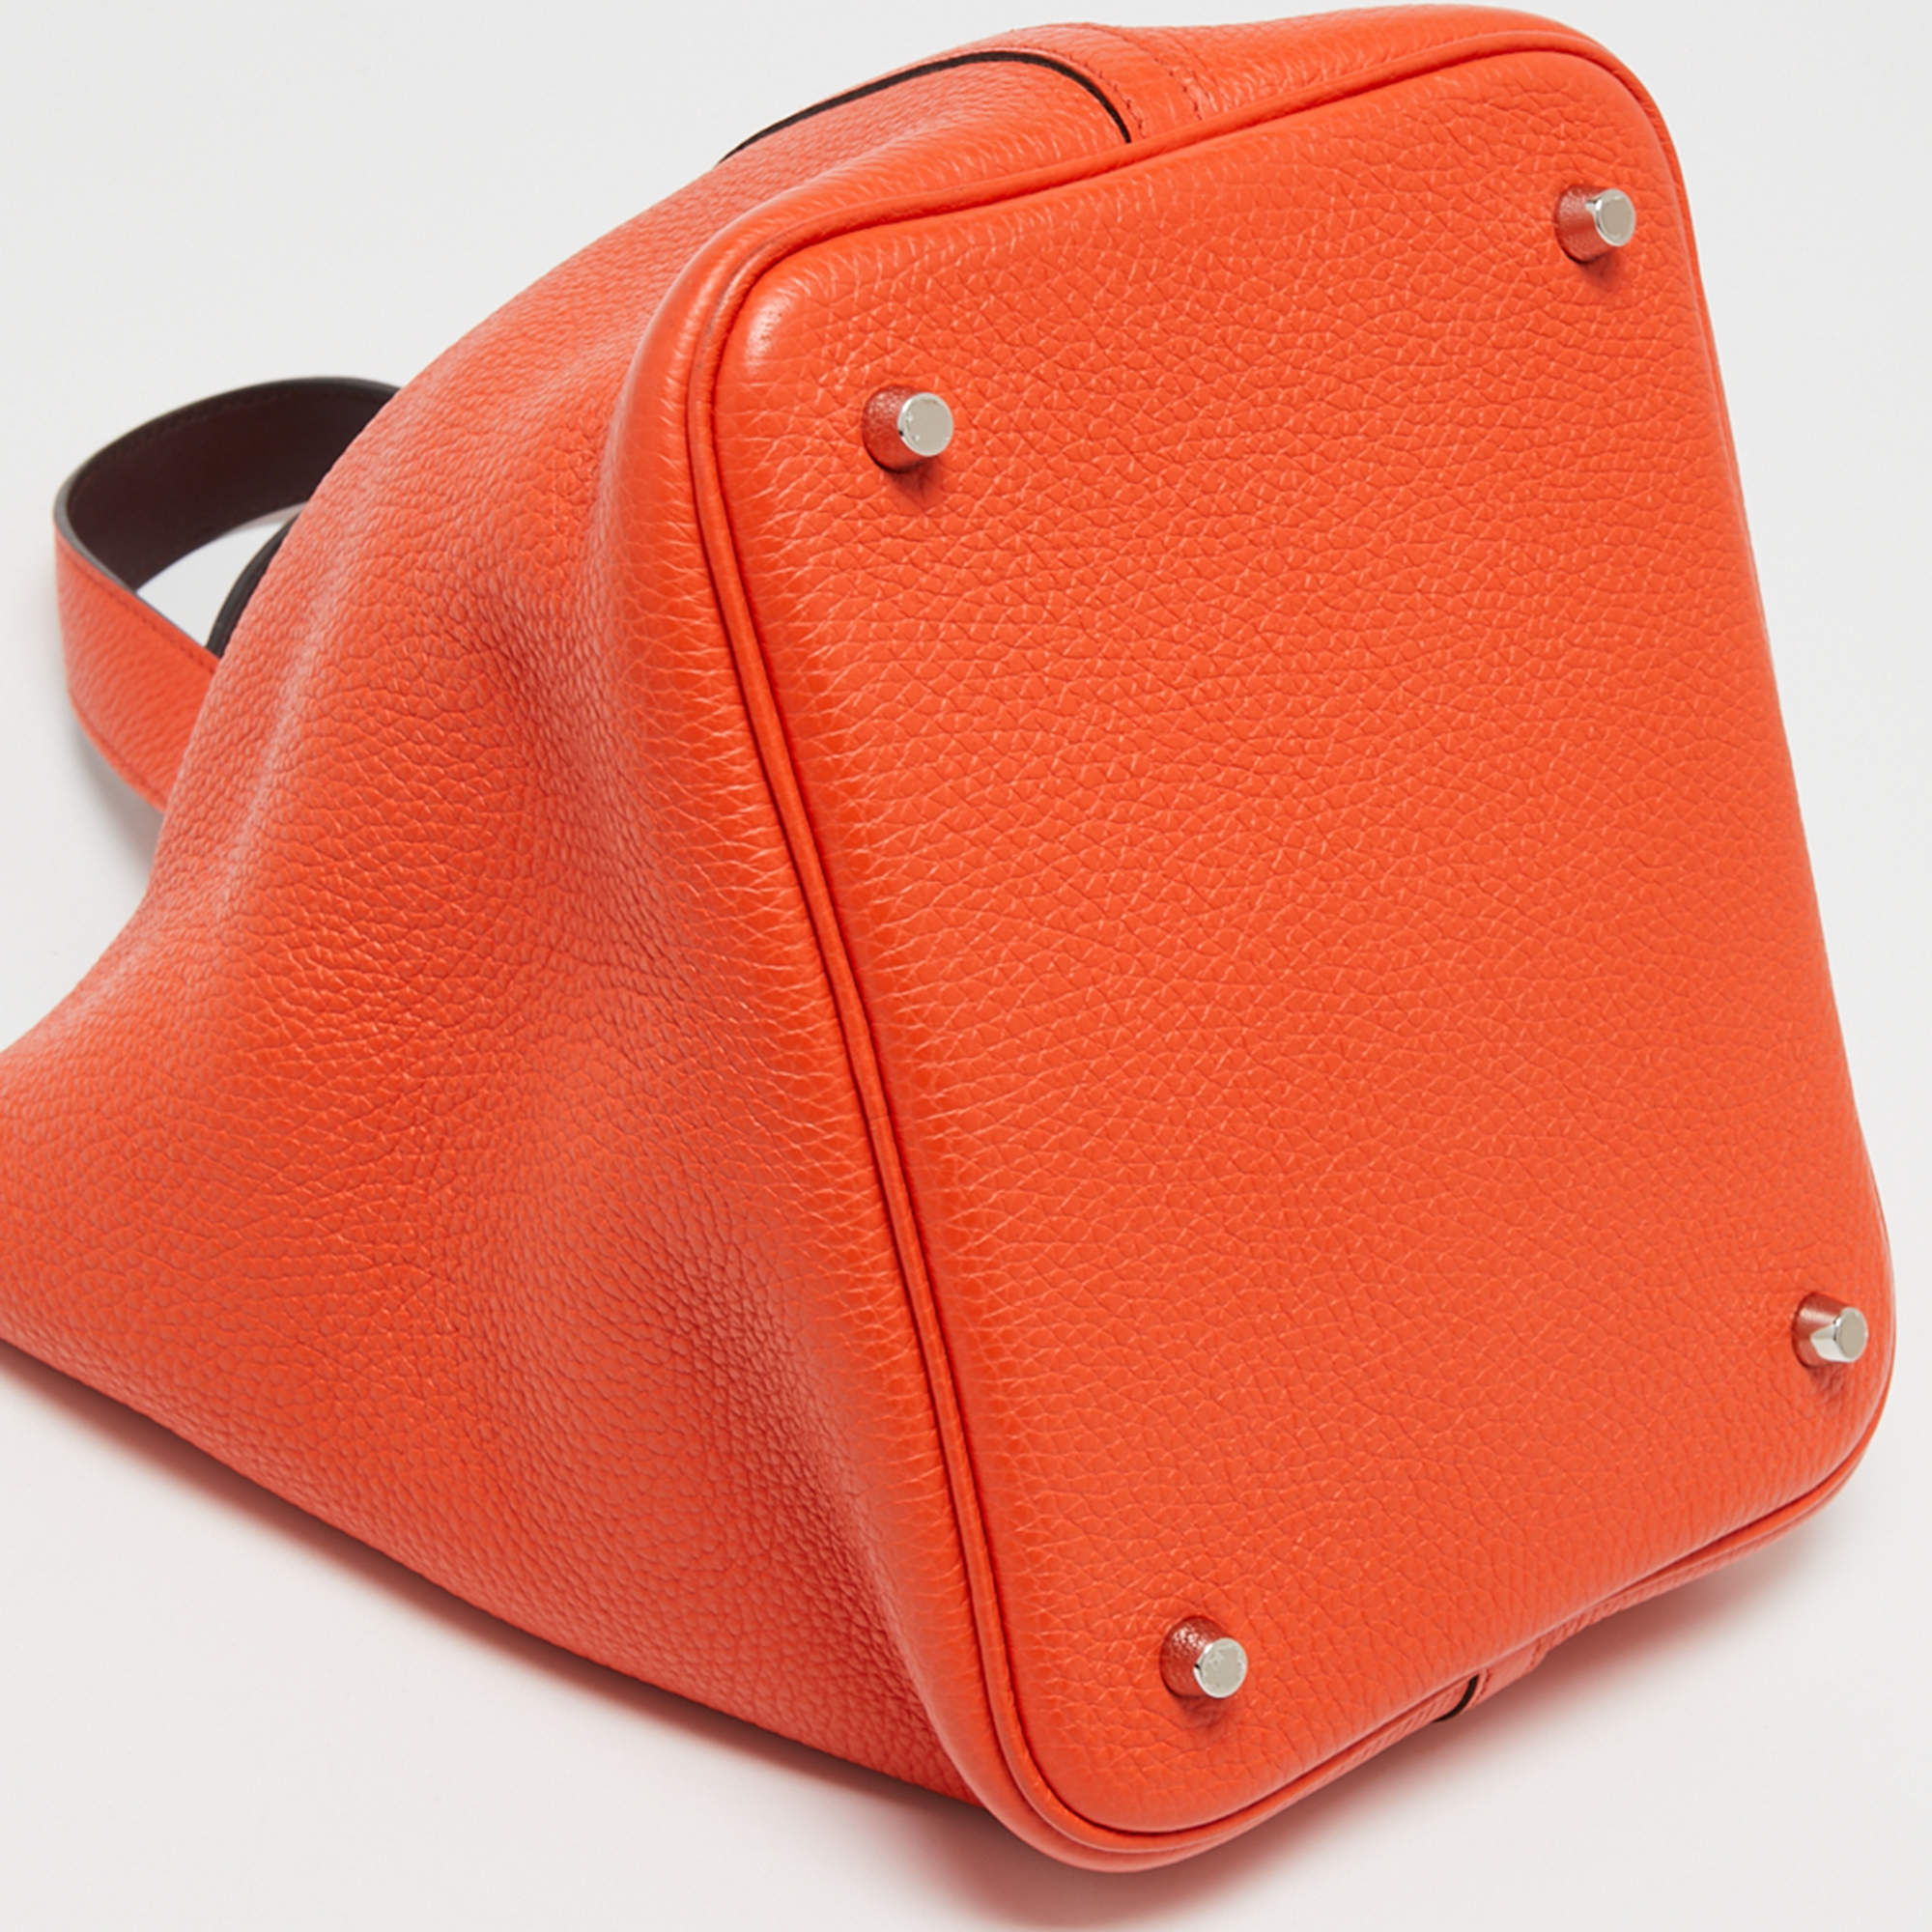 Handbags Hermès Hermes Red Ostrich Skin Leather Picotin Lock 22 Tote Bag